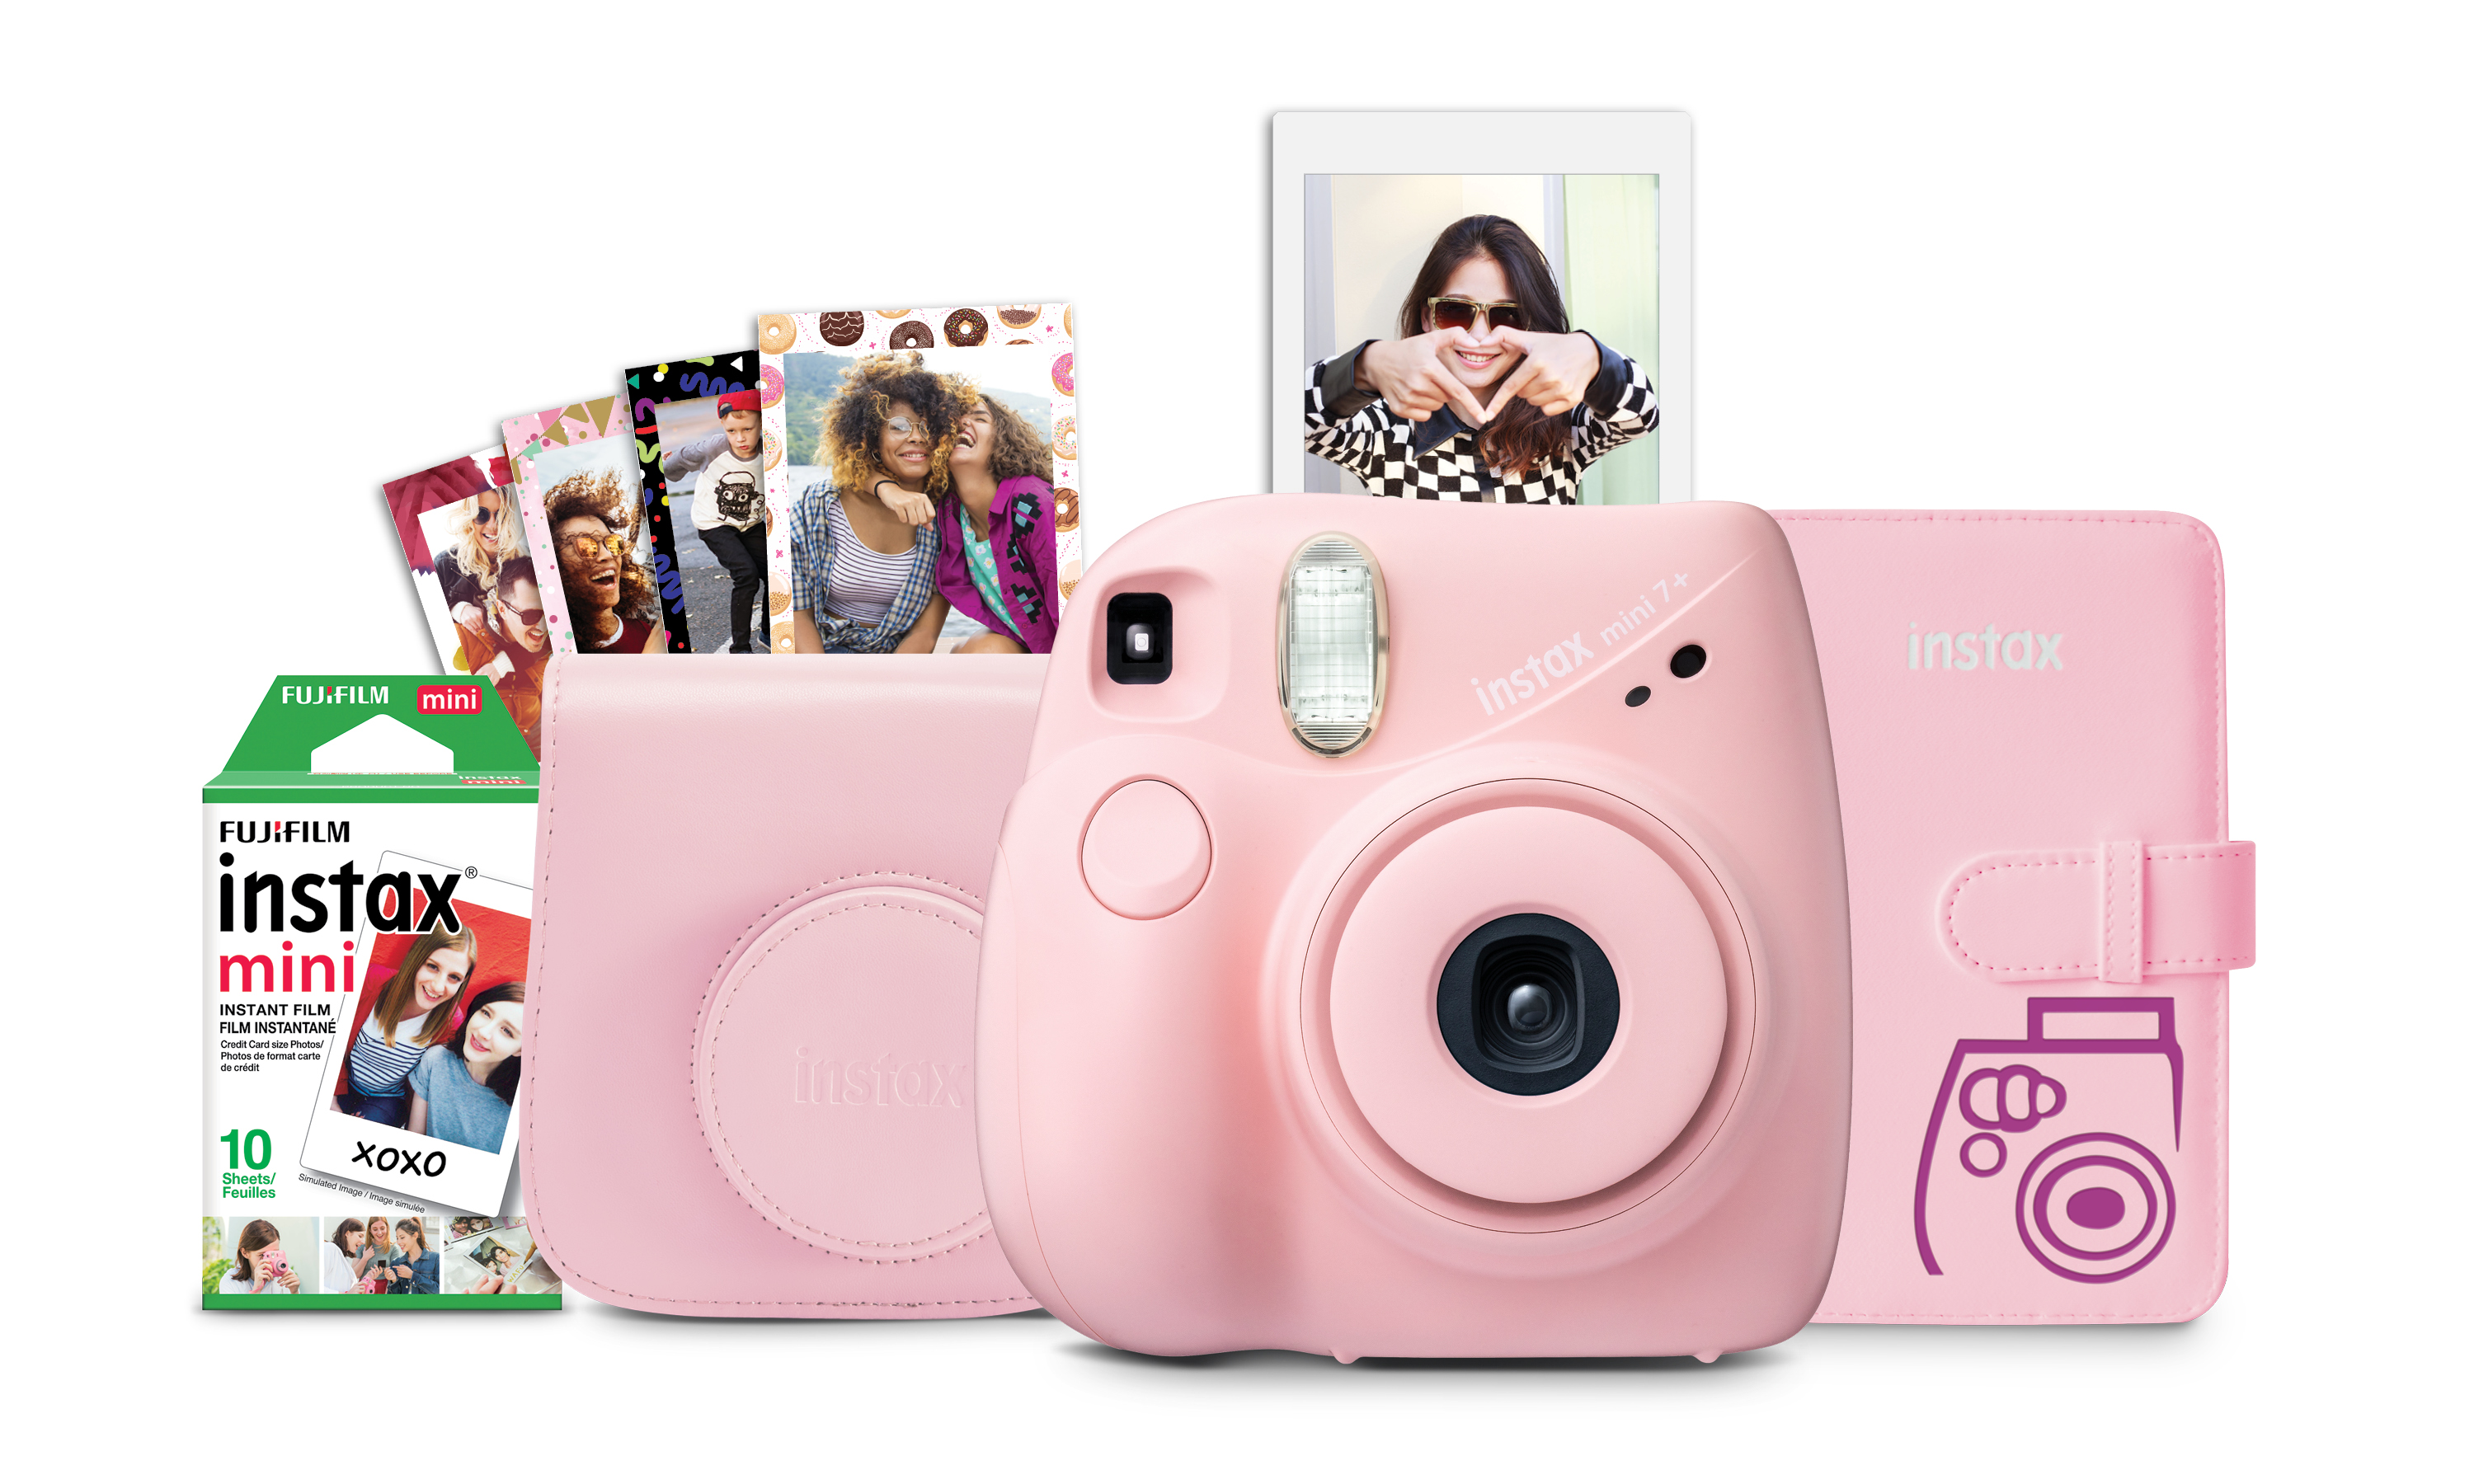 Fujifilm INSTAX Mini 7+ Bundle (10-Pack Film, Album, Camera Case, Stickers), Light Pink, Brand New Condition - image 1 of 11